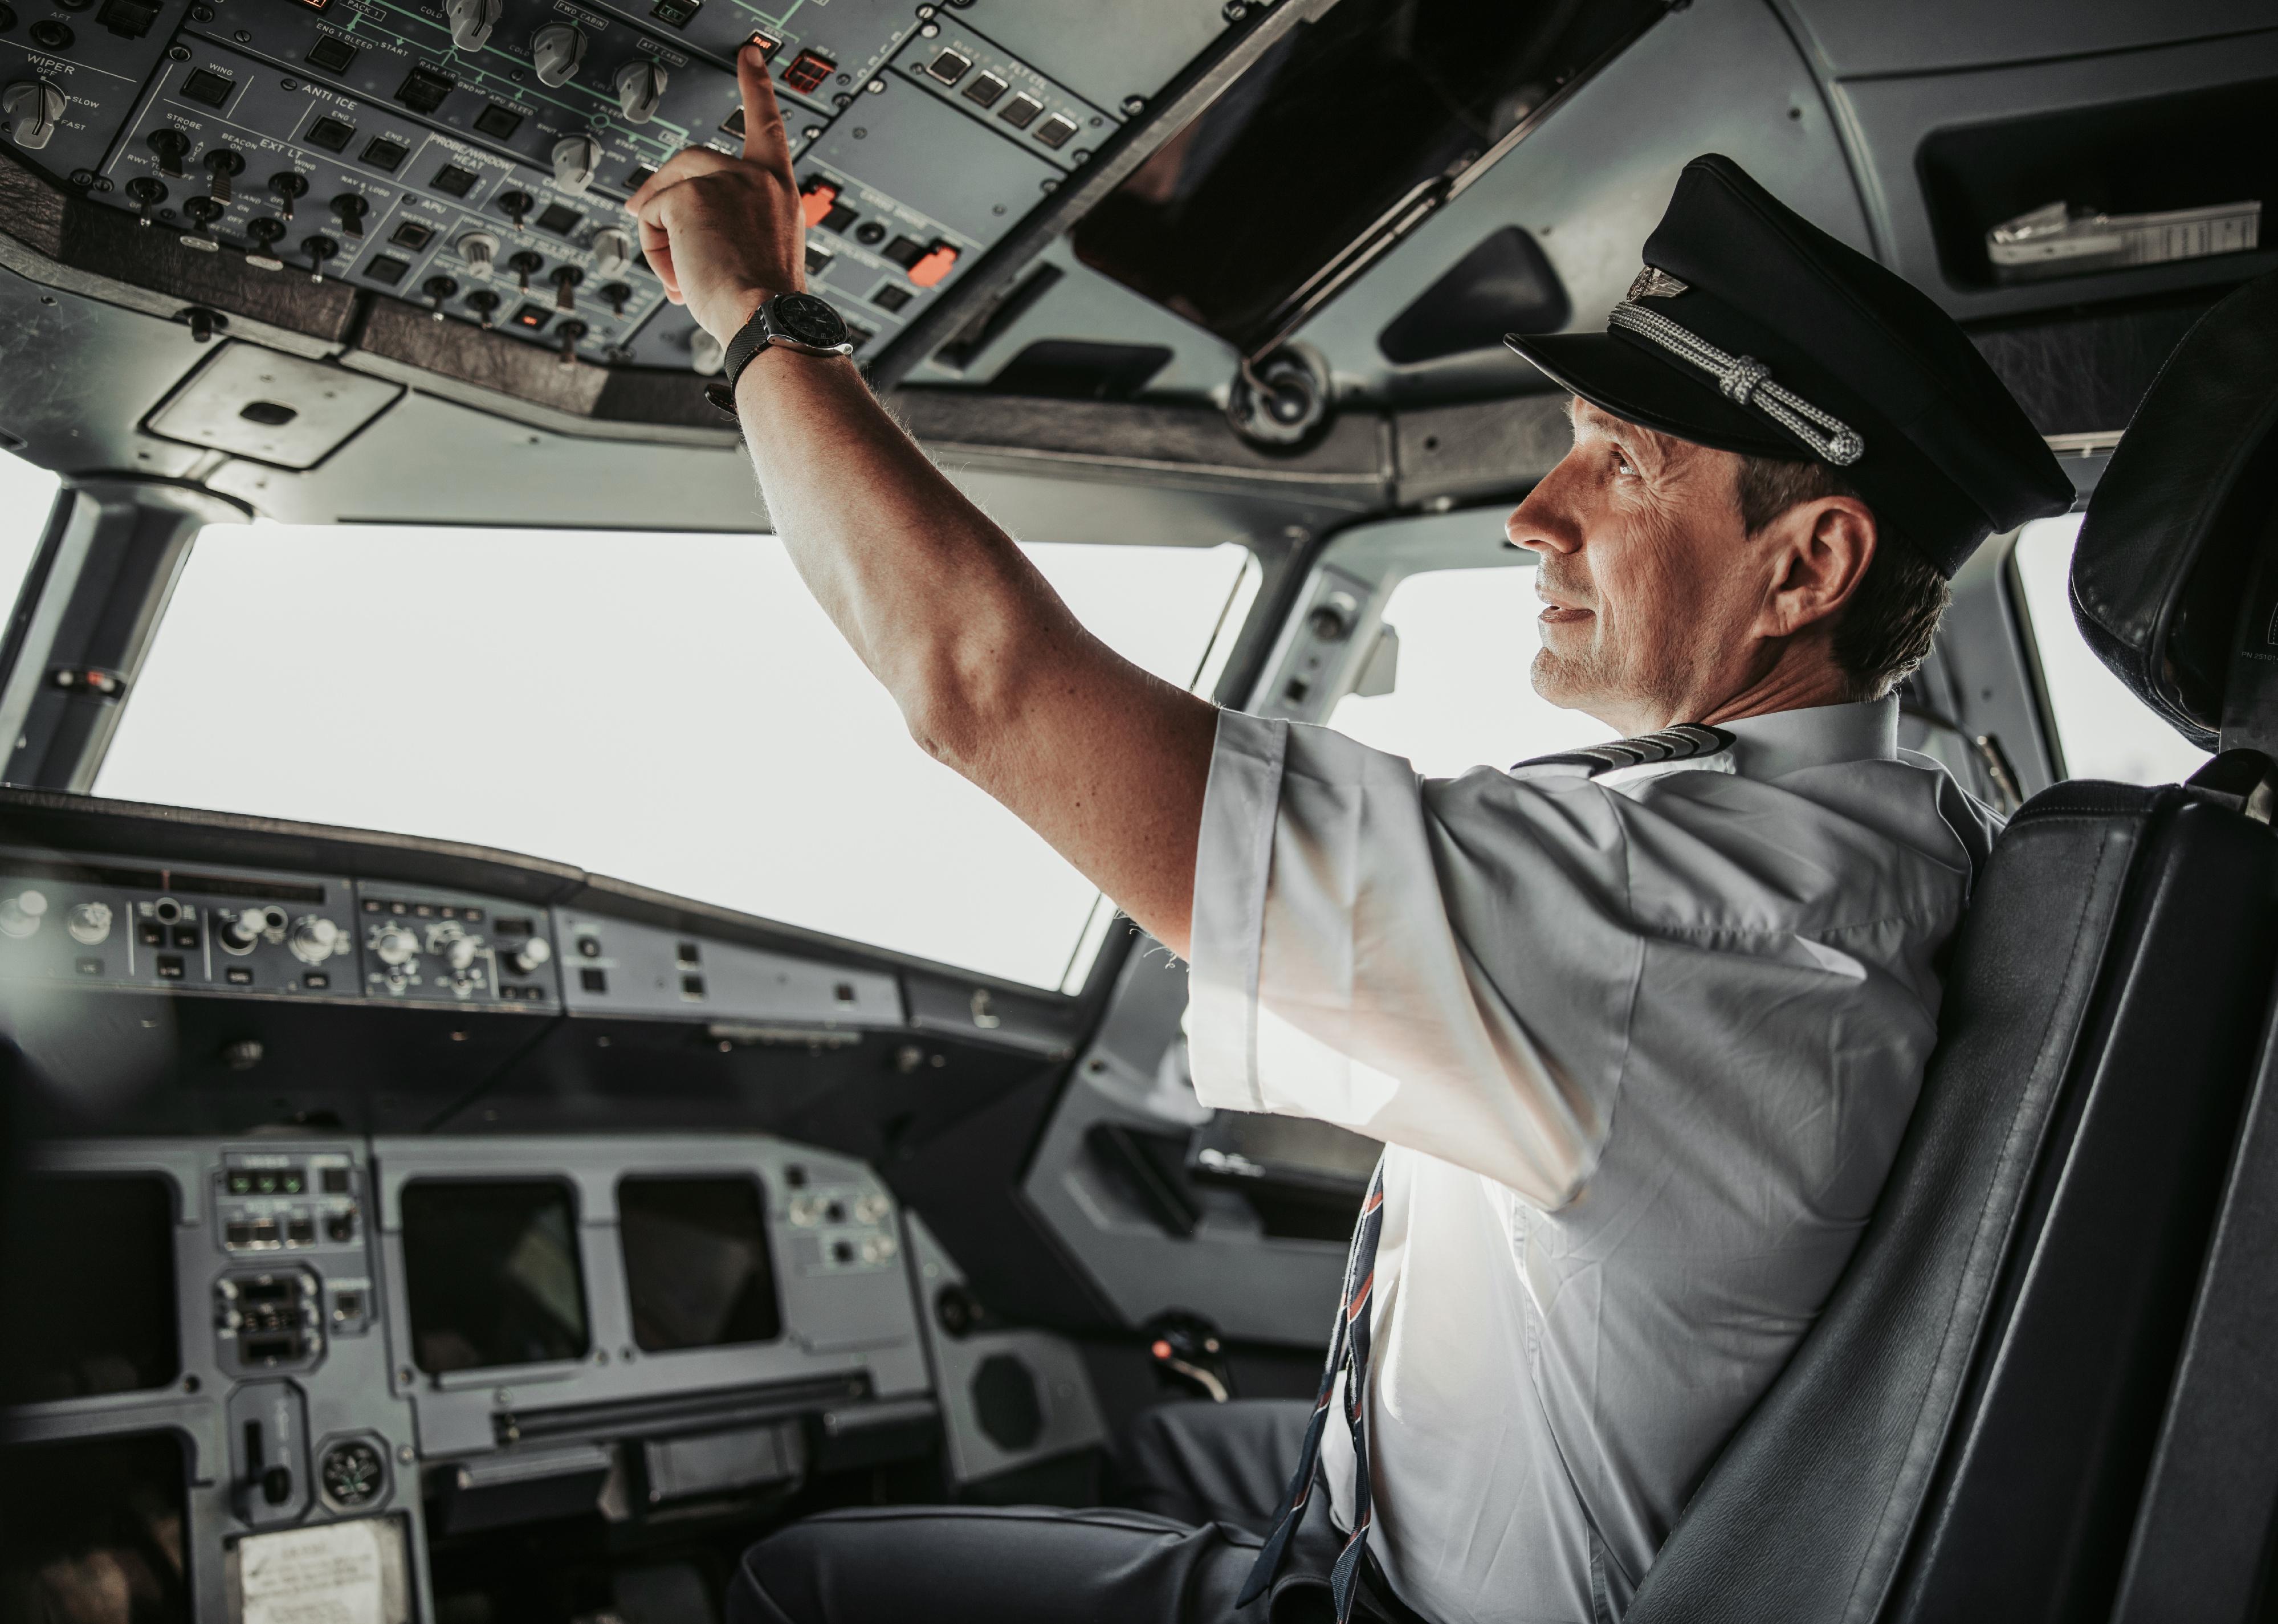 Man in uniform pushing button in cabin during flight.